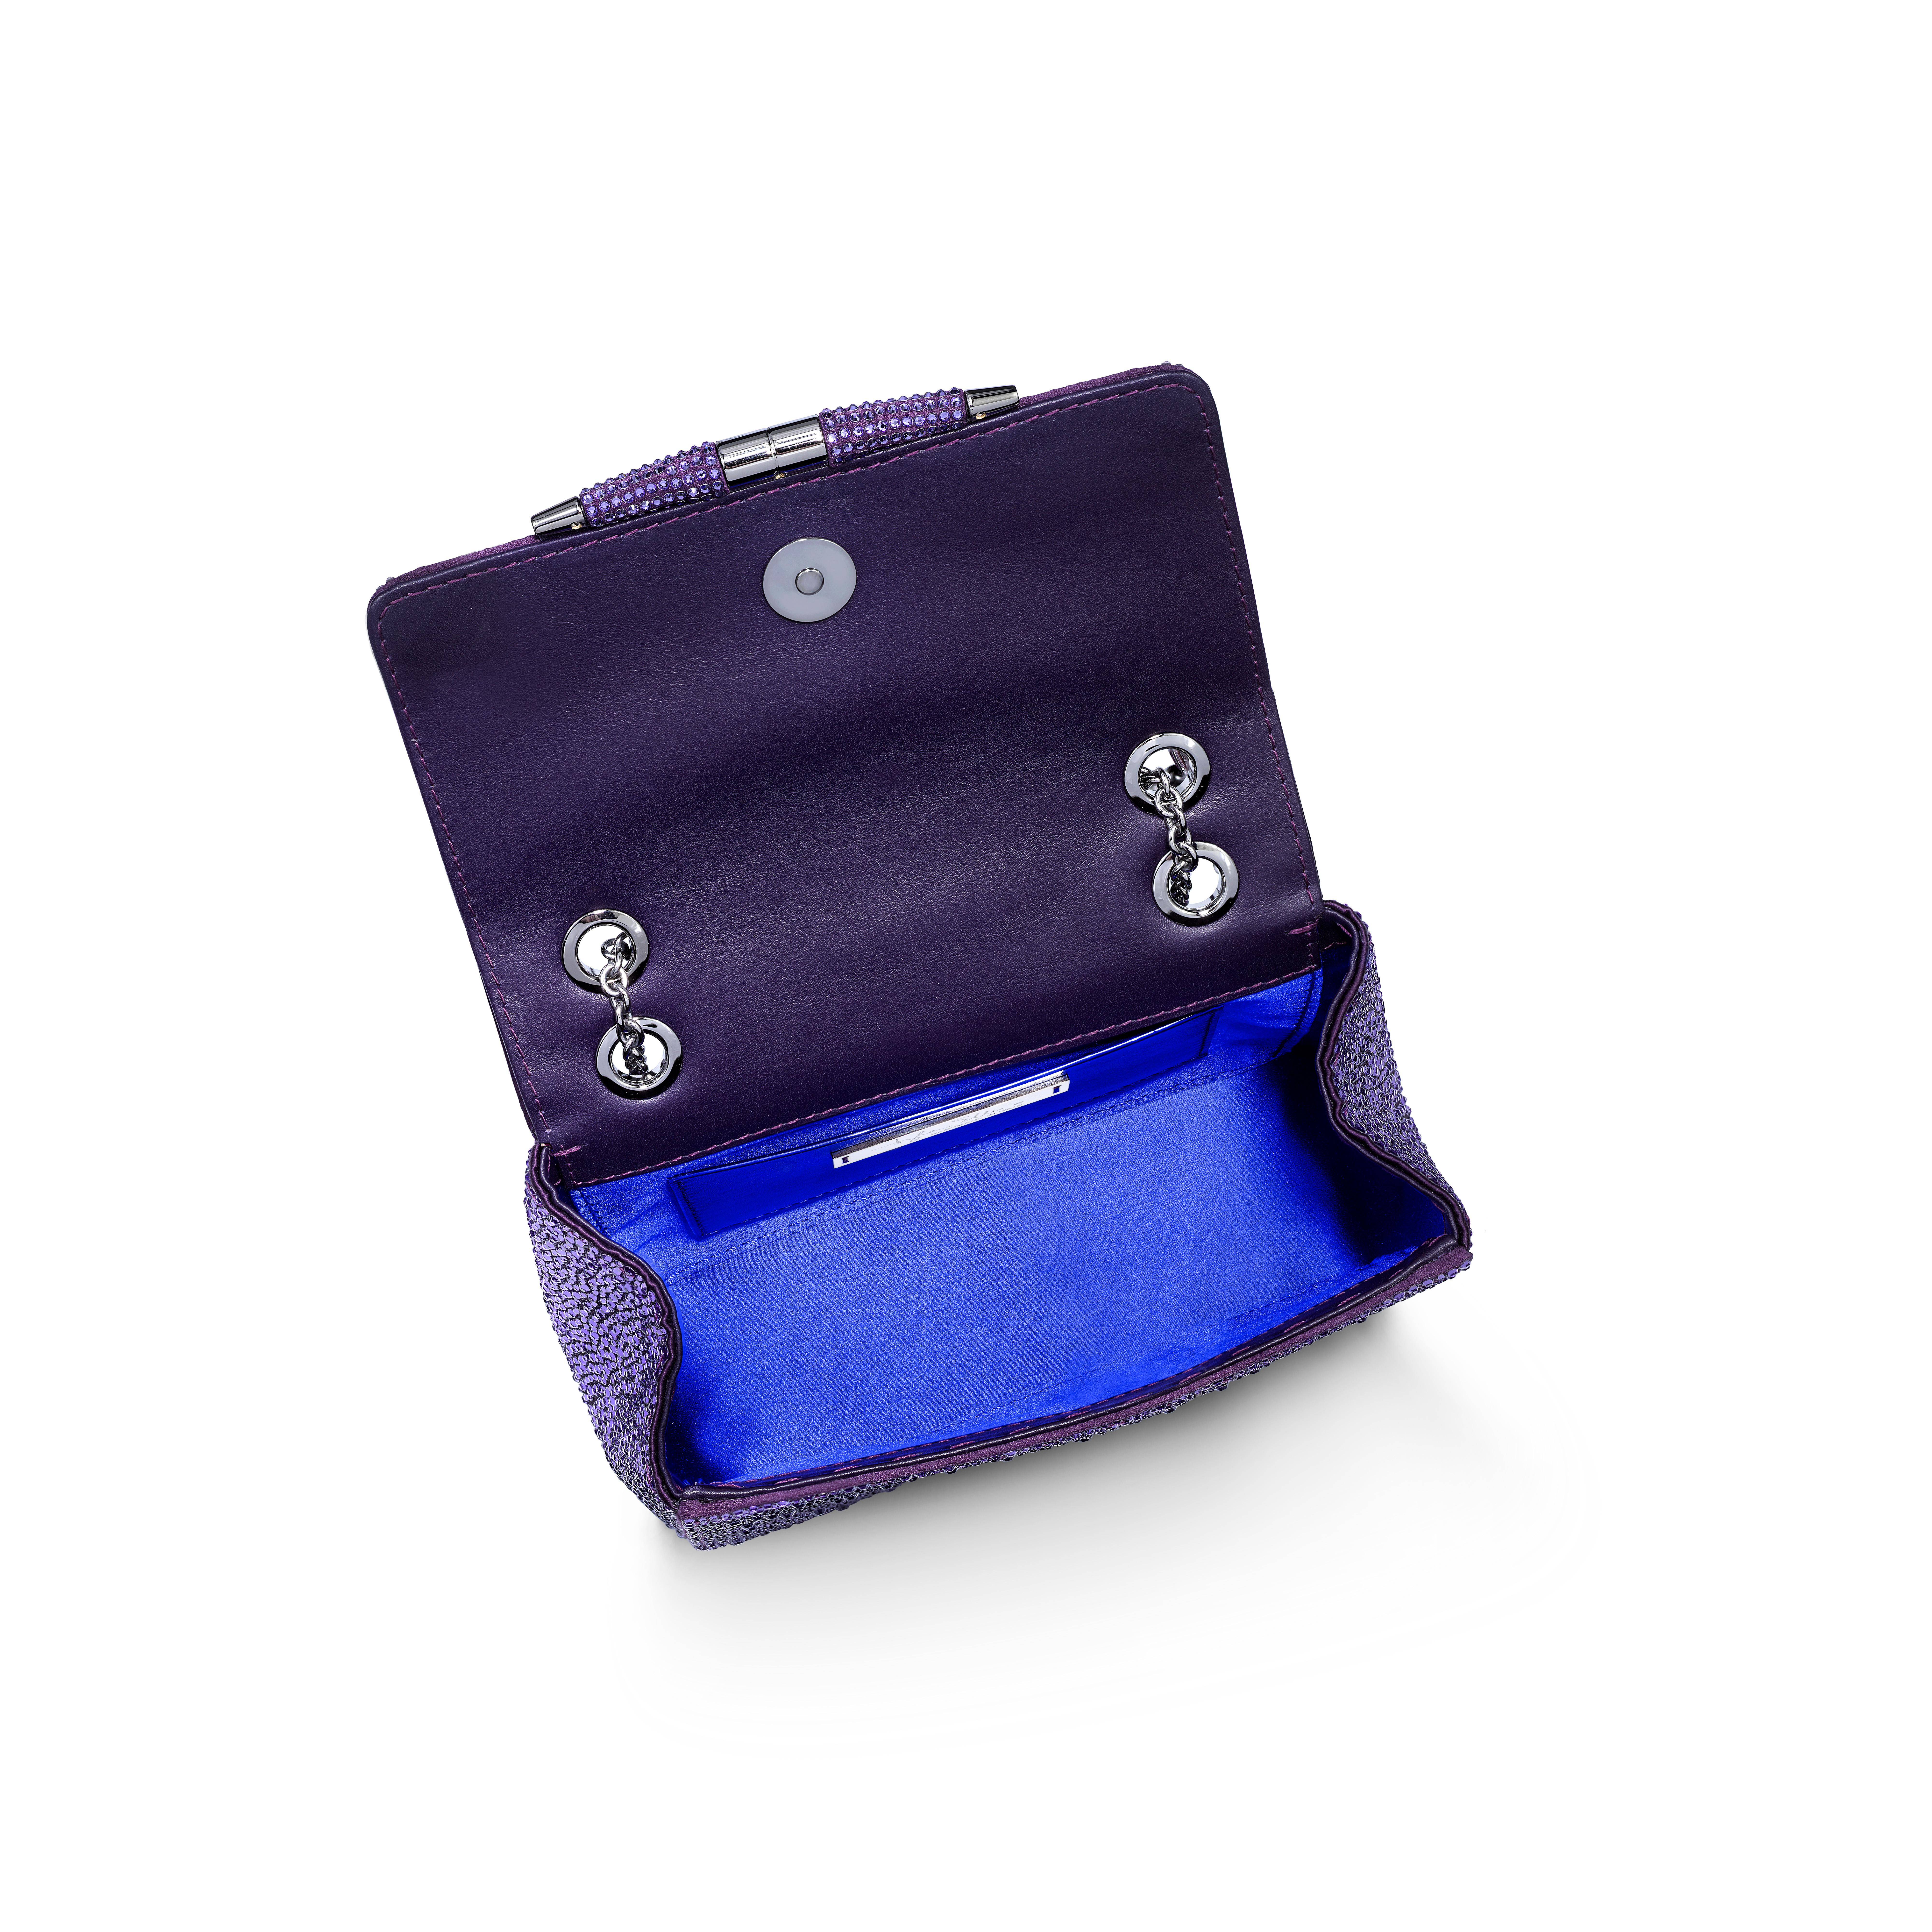 Black TYLER ELLIS Tiffany Classica Handbag Petite in Purple Crystal &Gunmetal Hardware